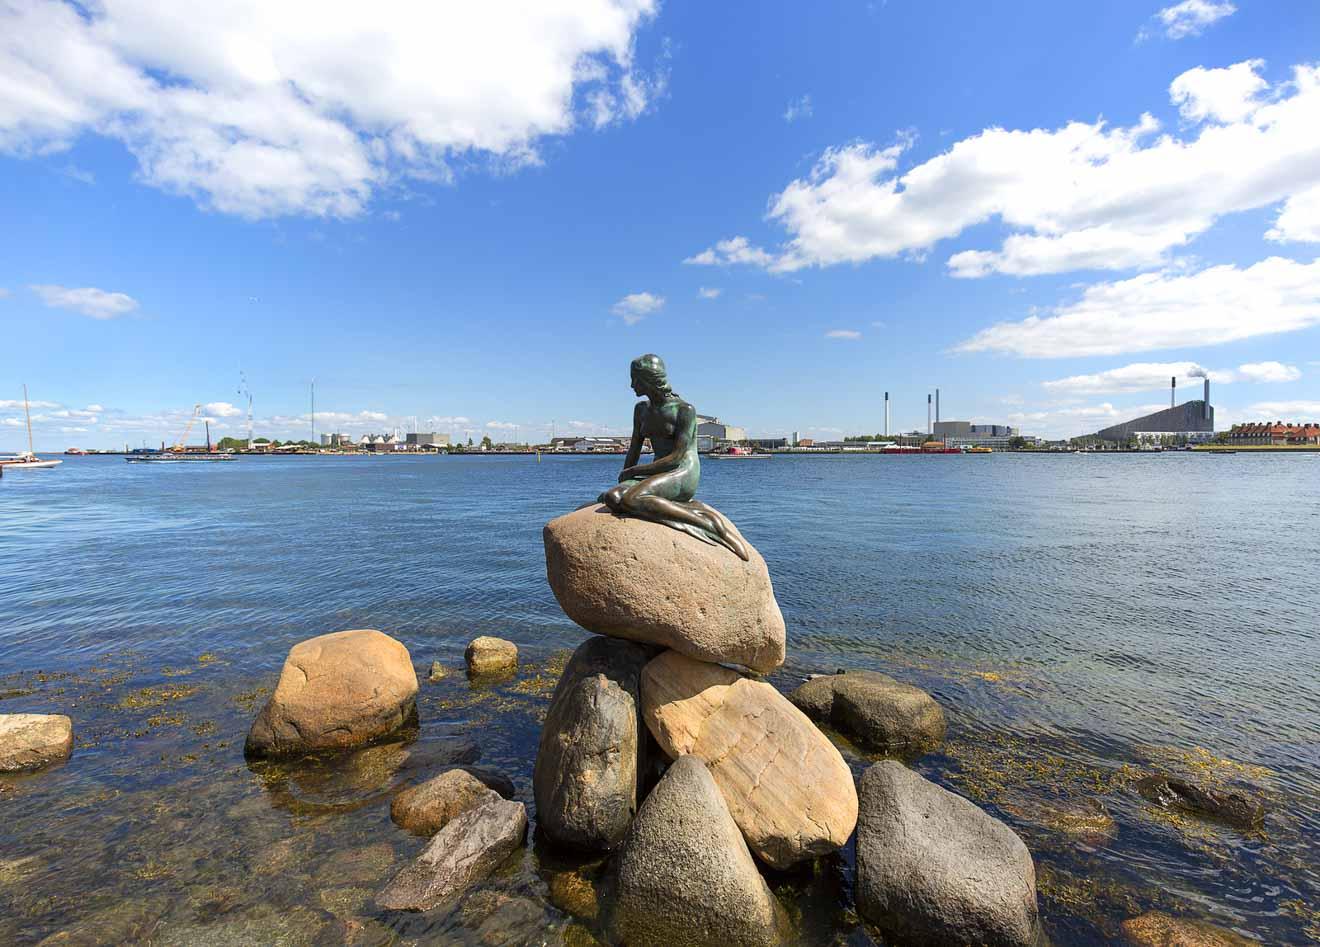 Where To Stay In Copenhagen 2021 - Best Neighborhoods and Hotels